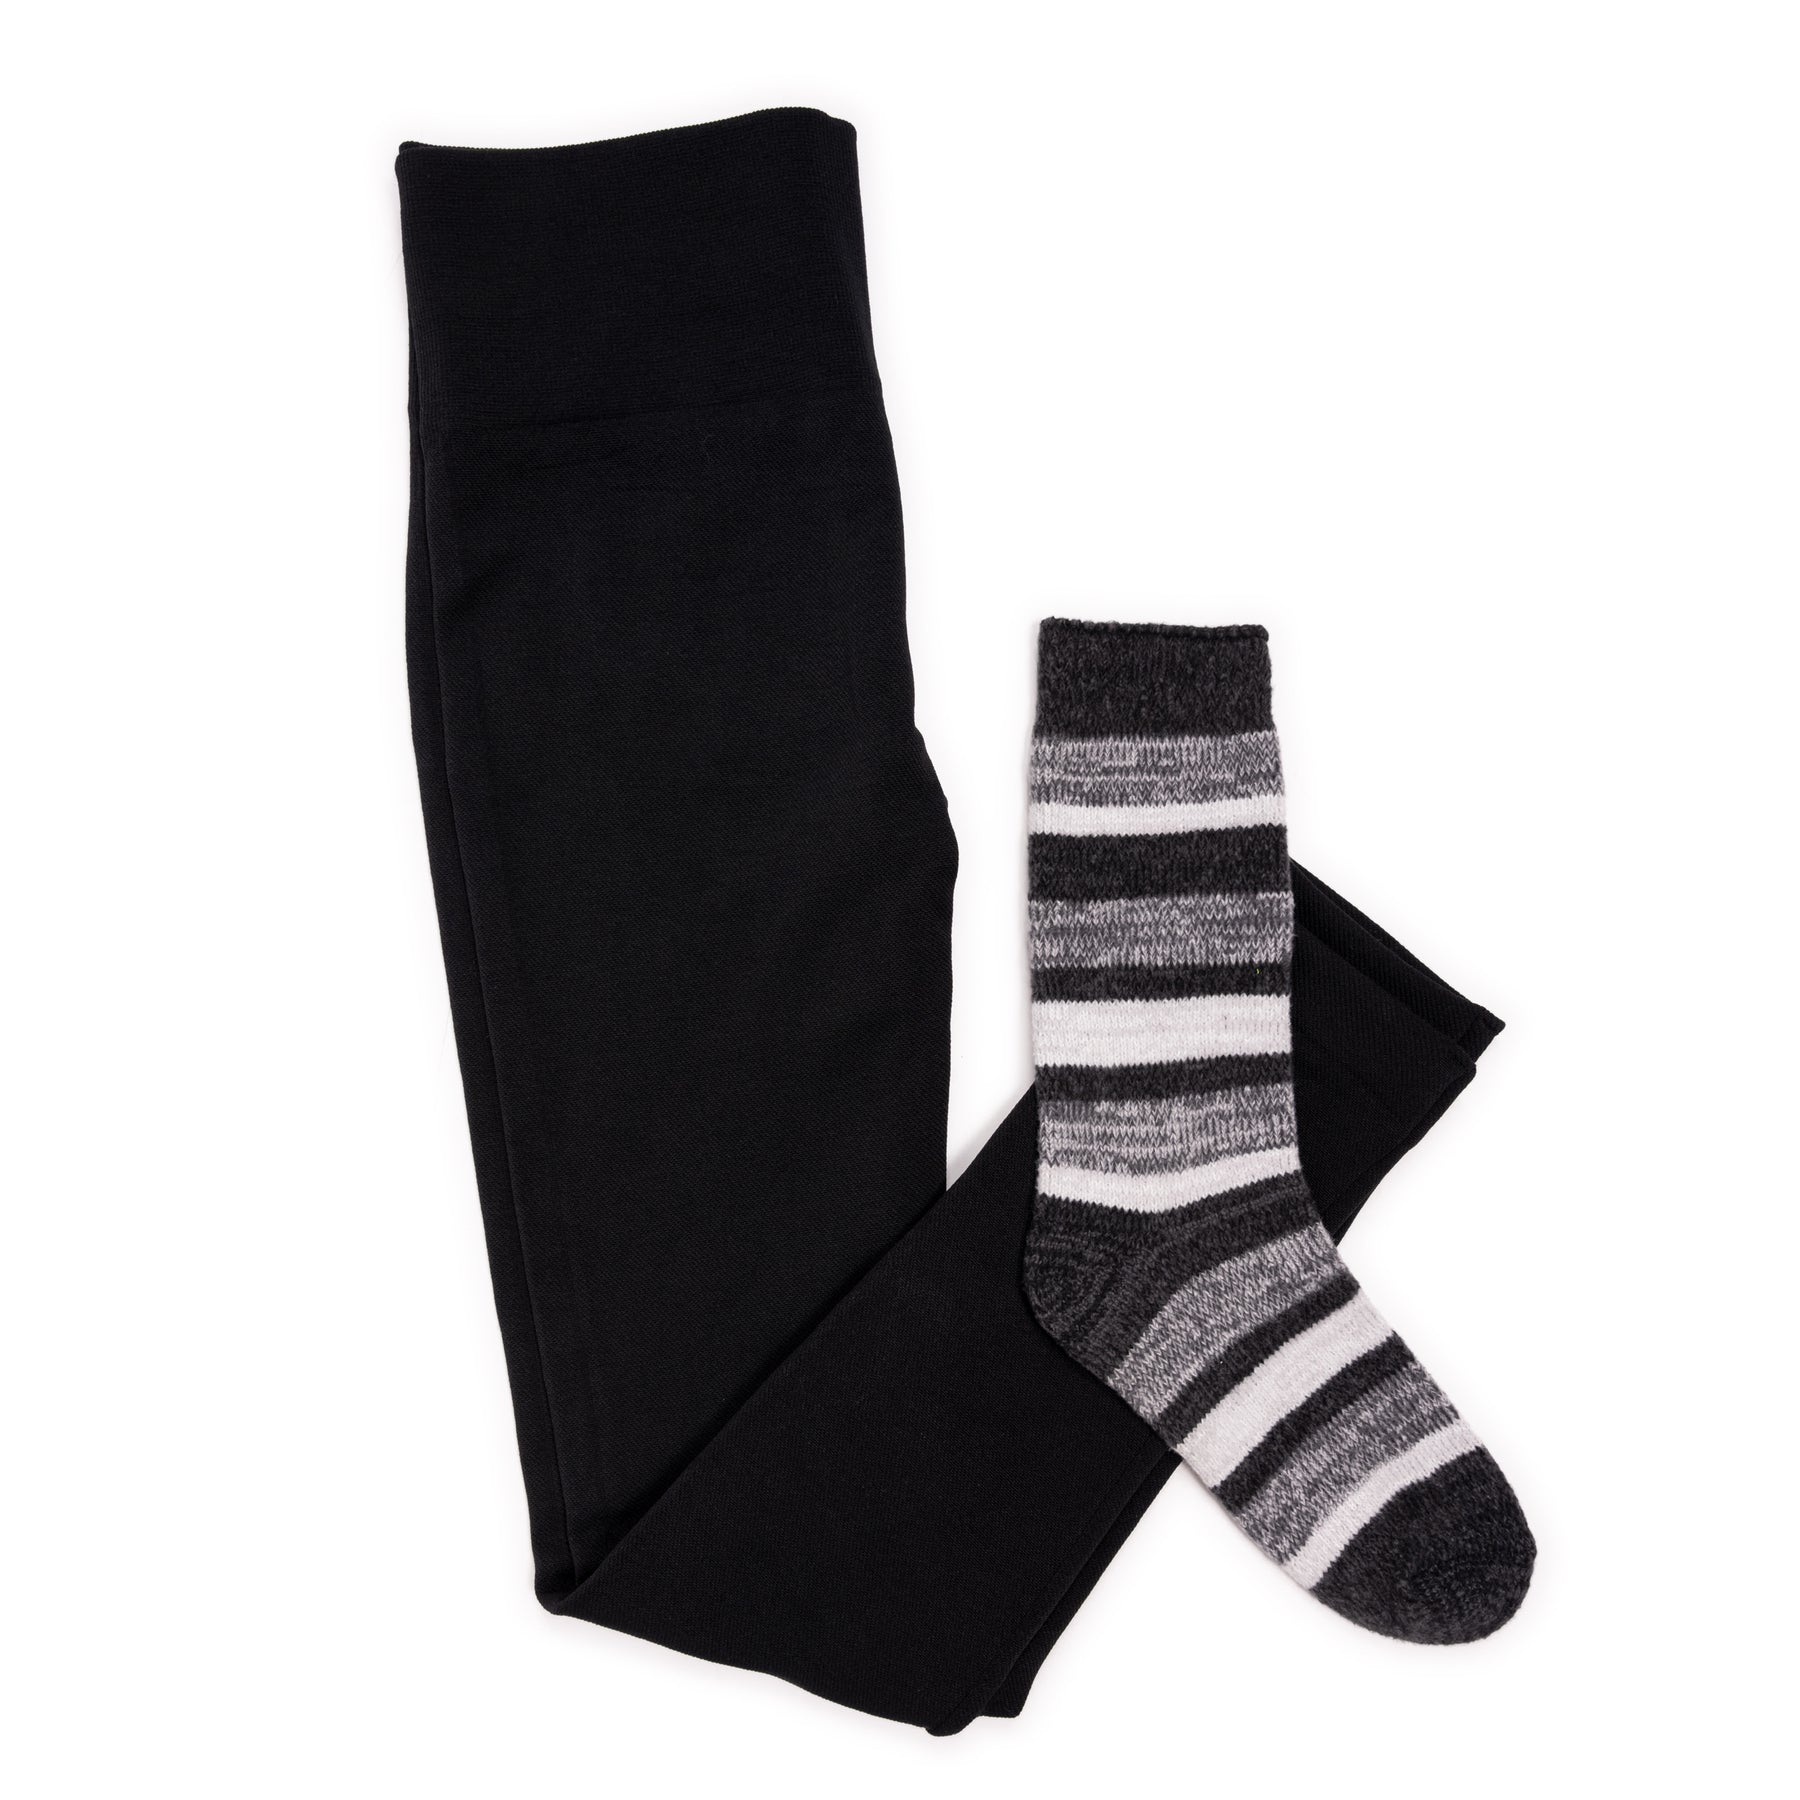 Two Left Feet Sock Co Wicked Cool Leggings-Size S/M 4-10 Lips/Bat or  Pumpkins